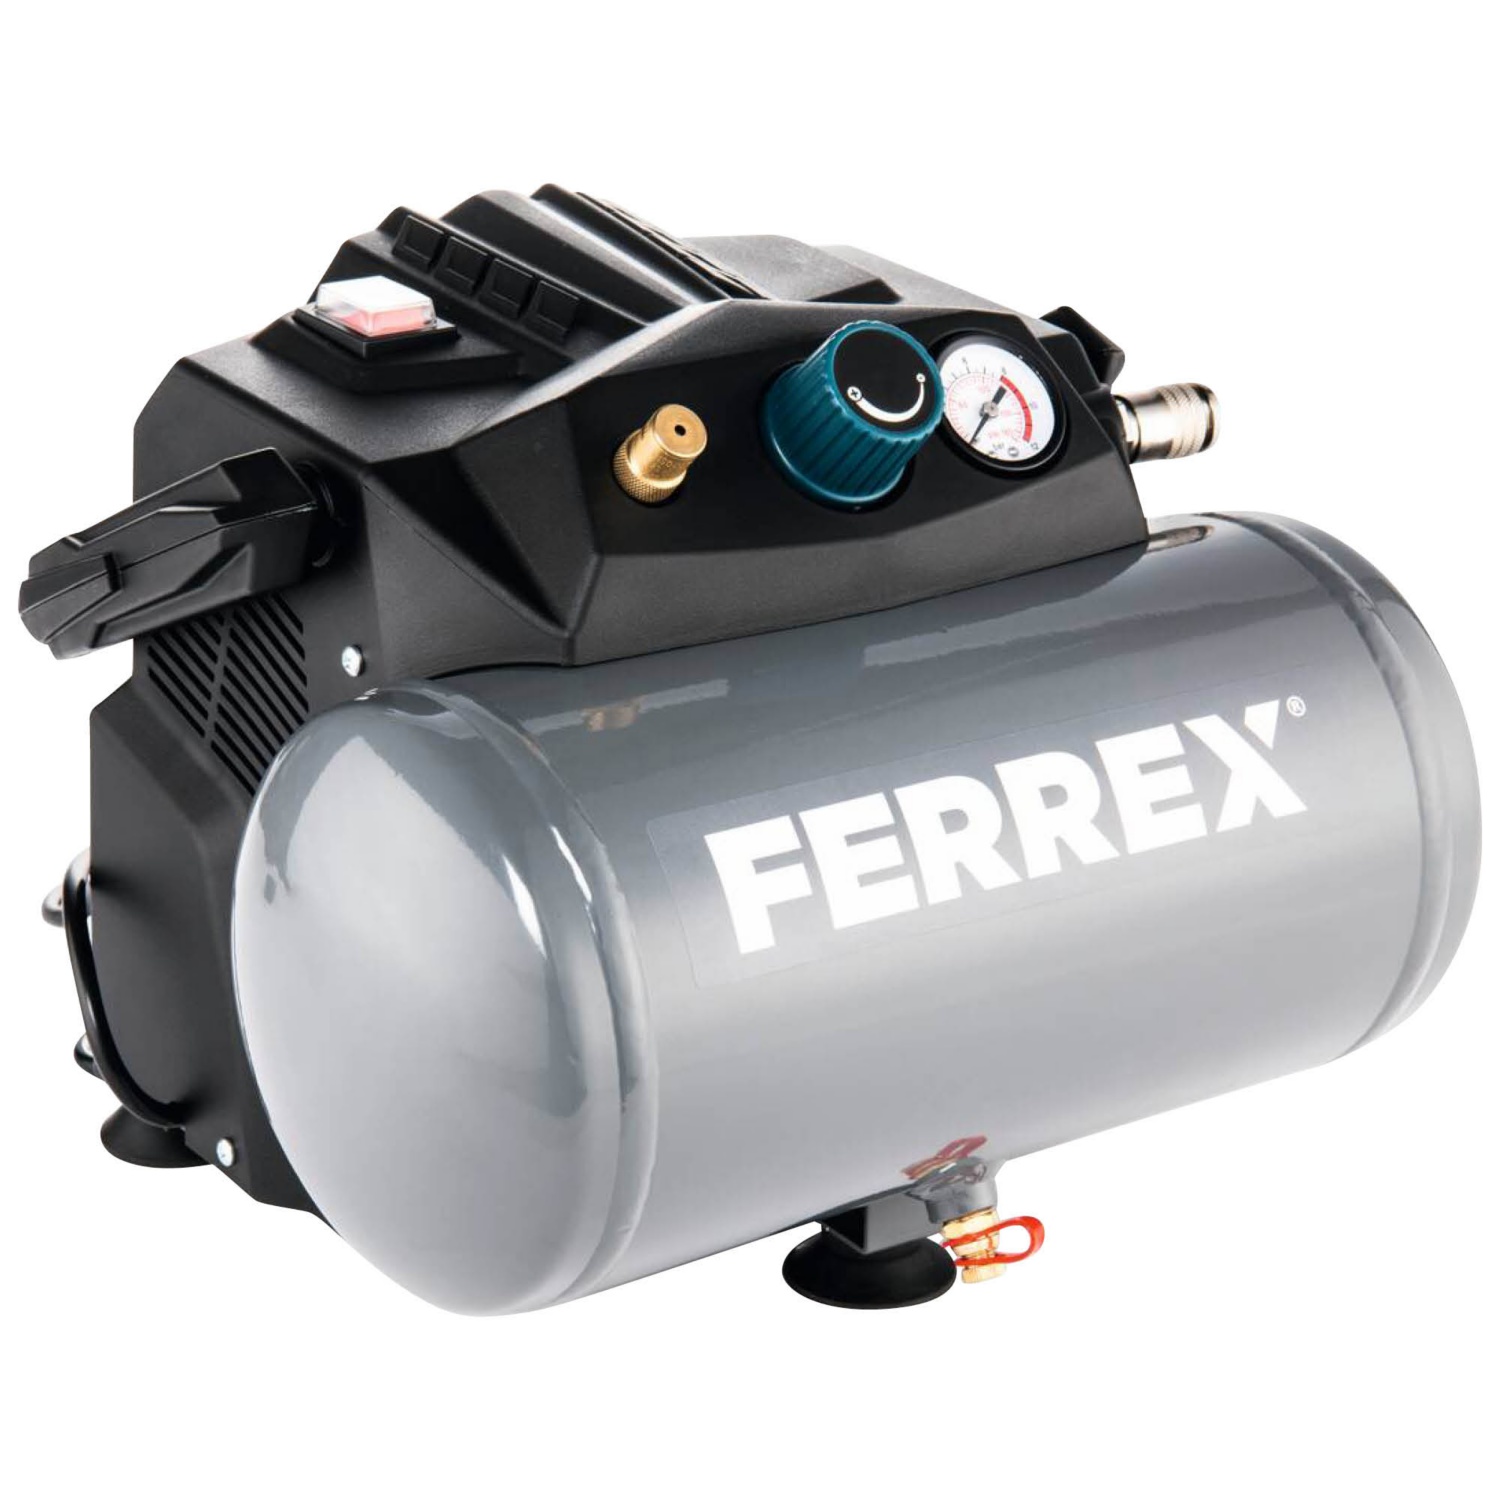 FERREX Compressore